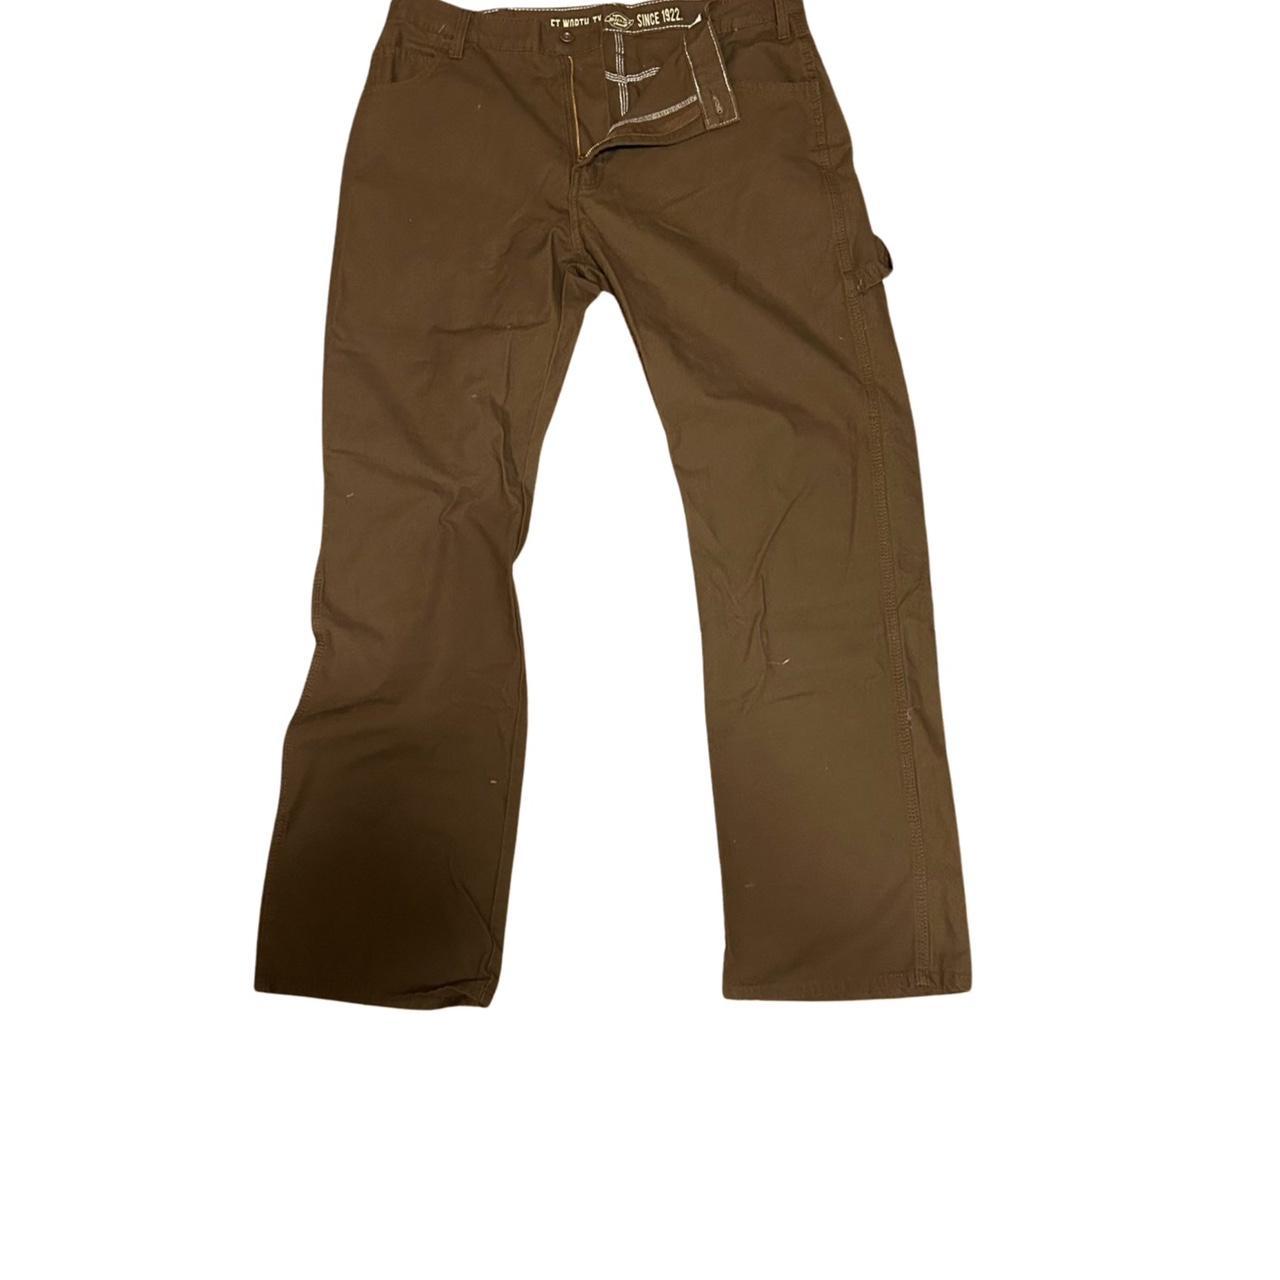 Sick dickies brown carpenter pants size 36” will... - Depop